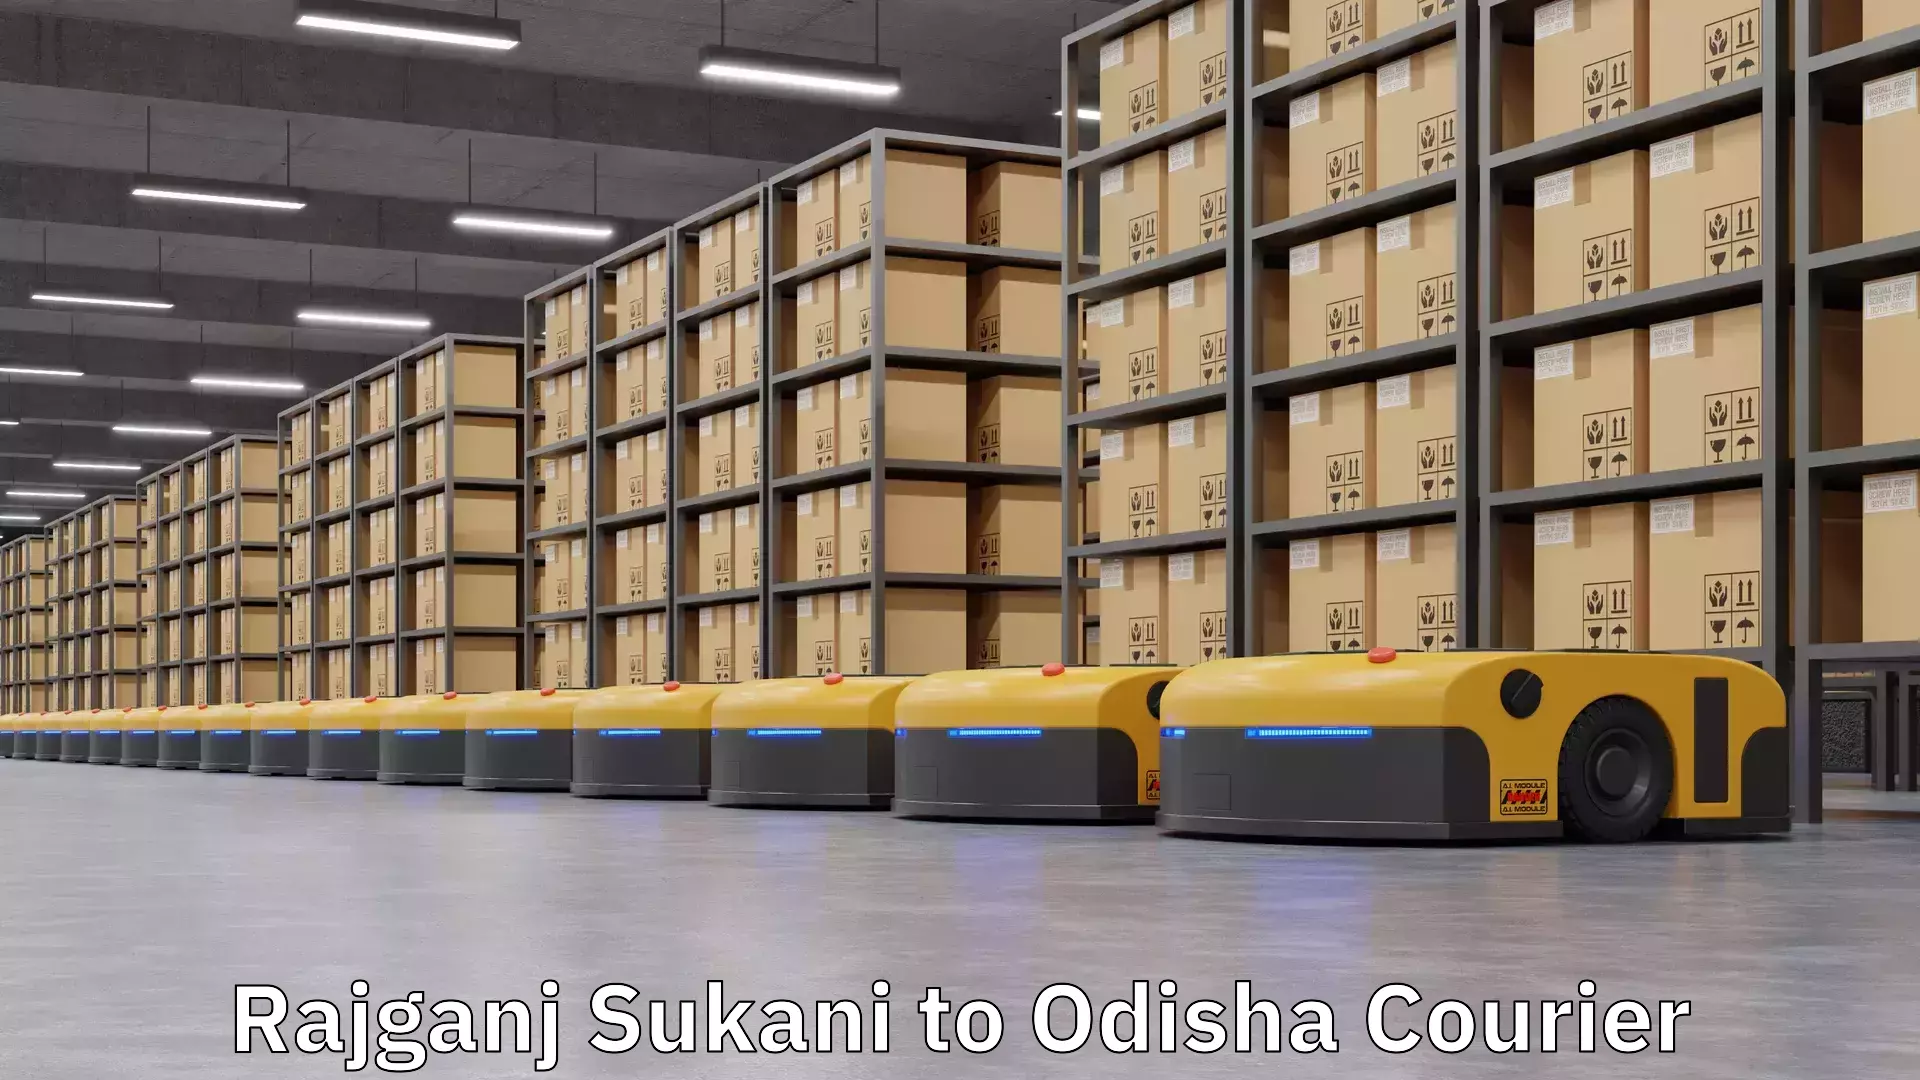 Courier service partnerships Rajganj Sukani to Odisha